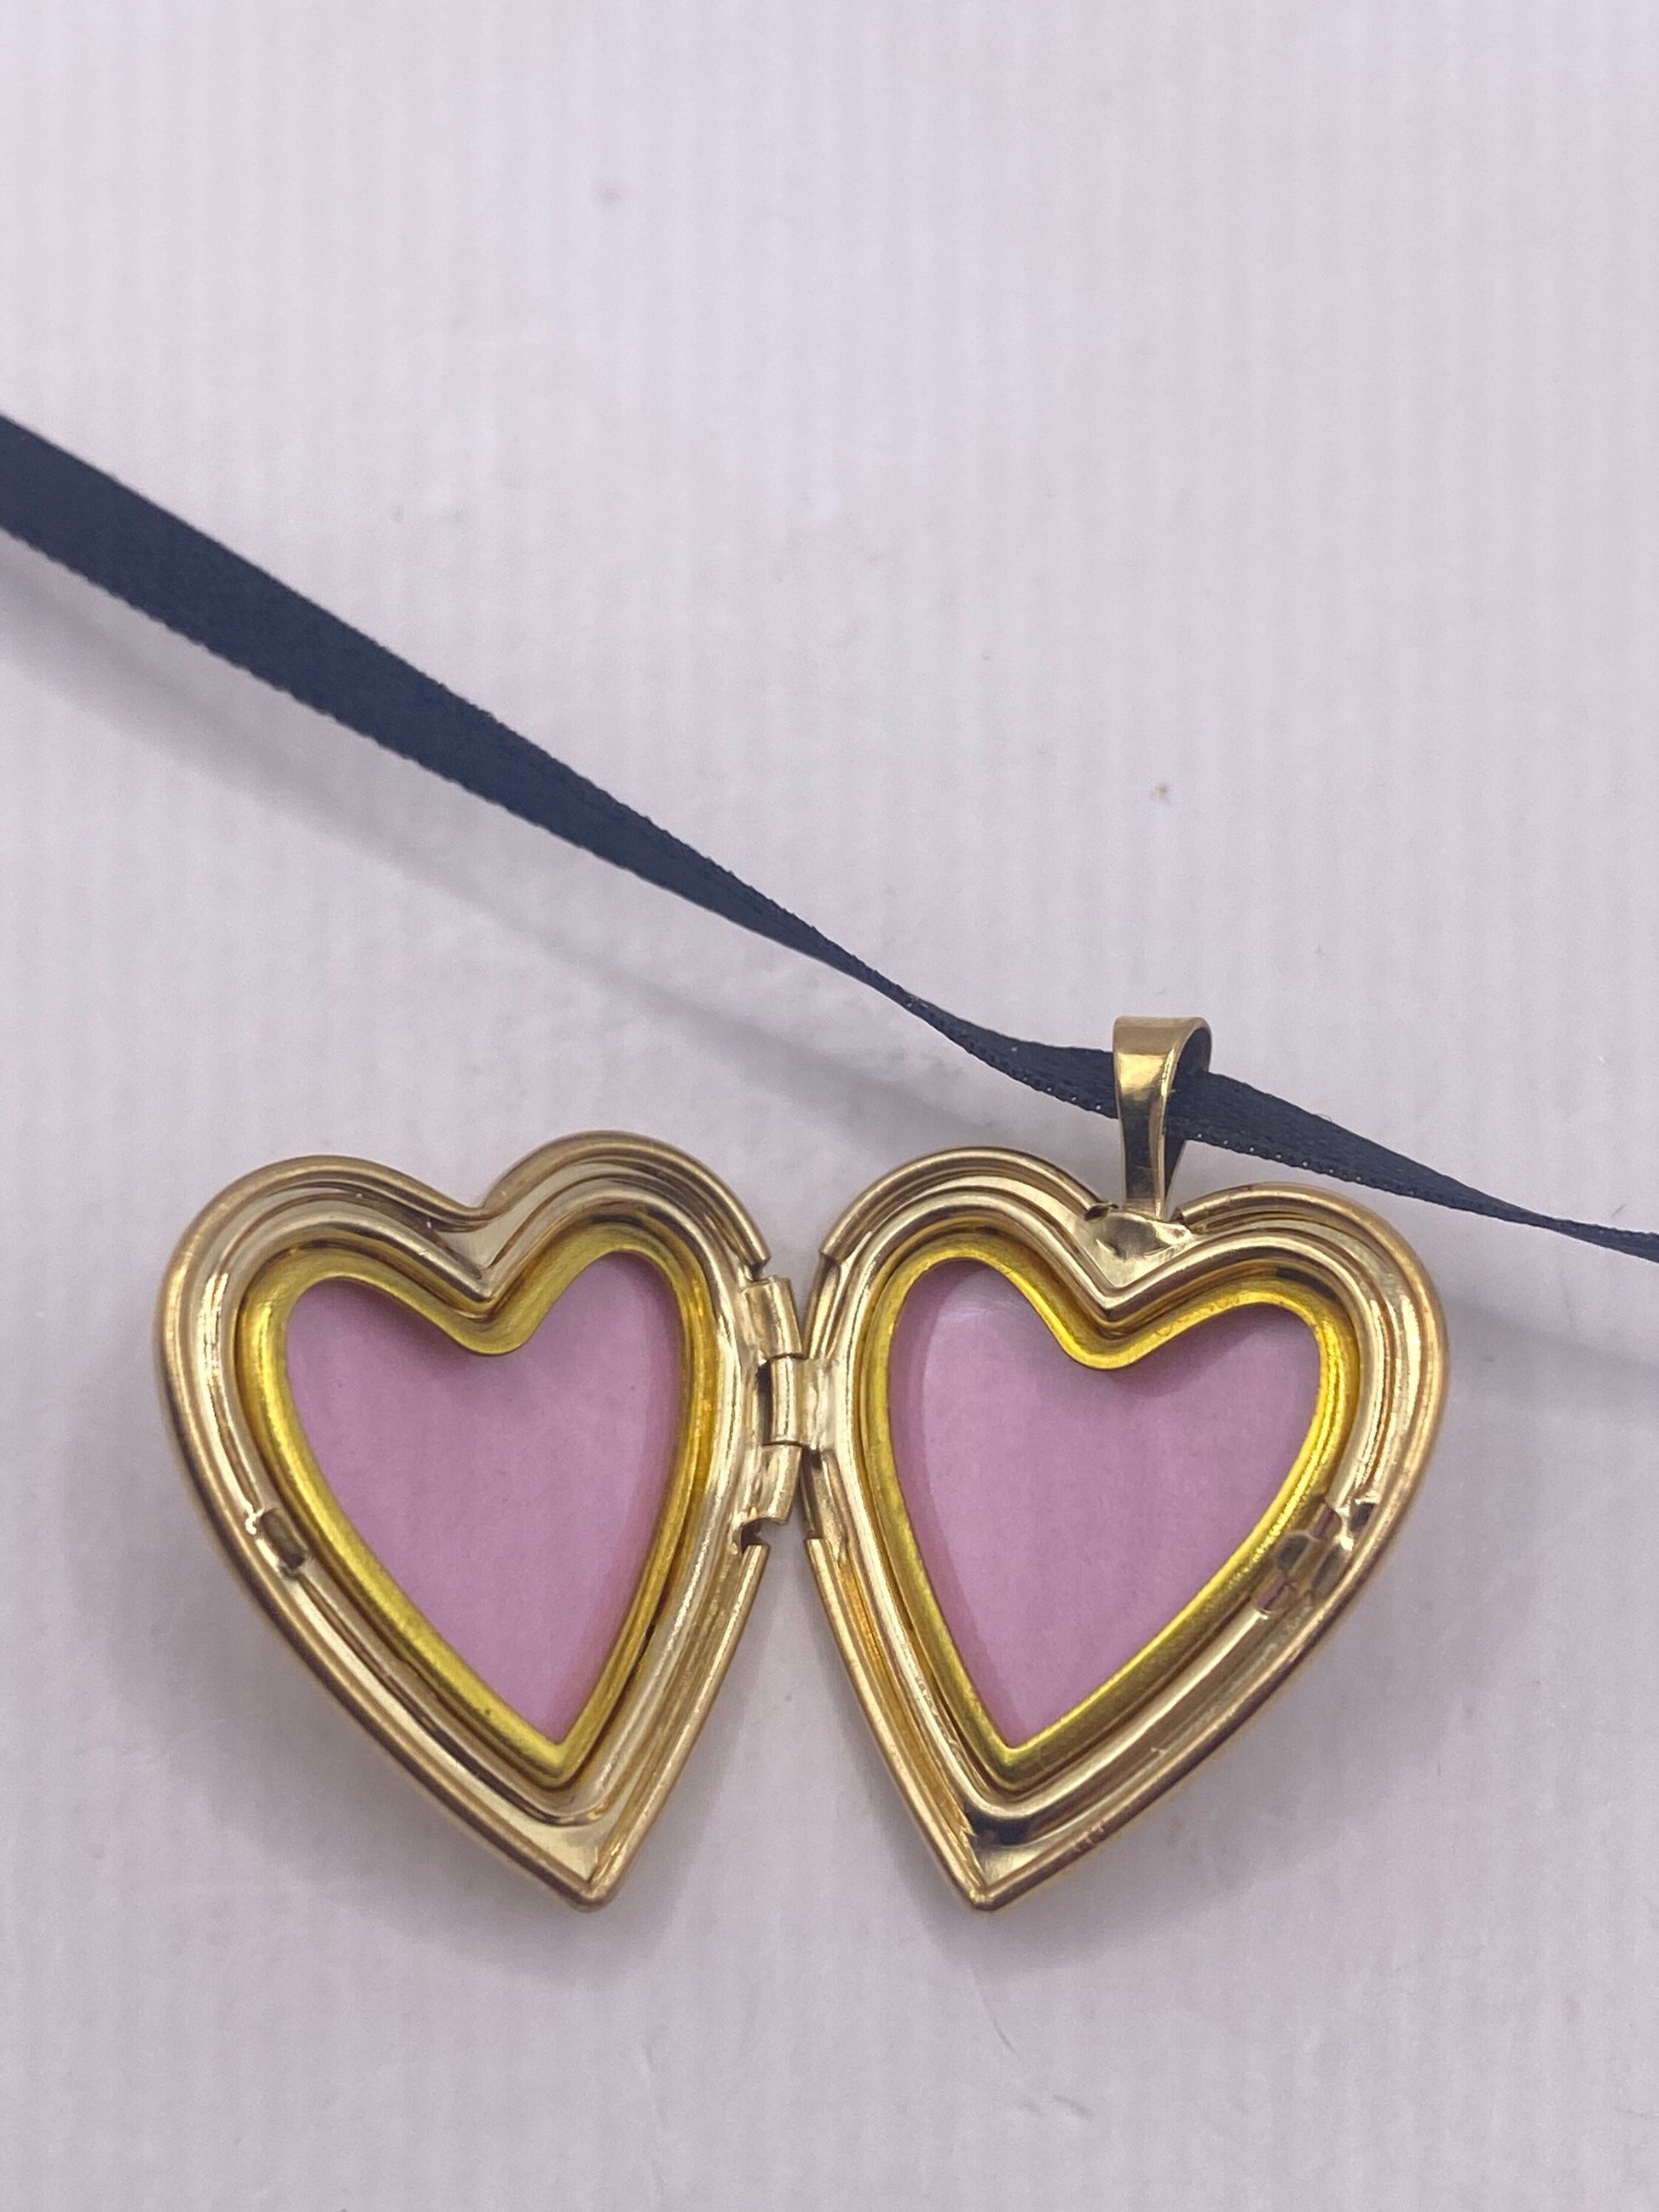 Vintage Gold Locket | Tiny Heart 9k Gold Filled Pendant Photo Memory Charm Engraved Etched Design | Choker Necklace